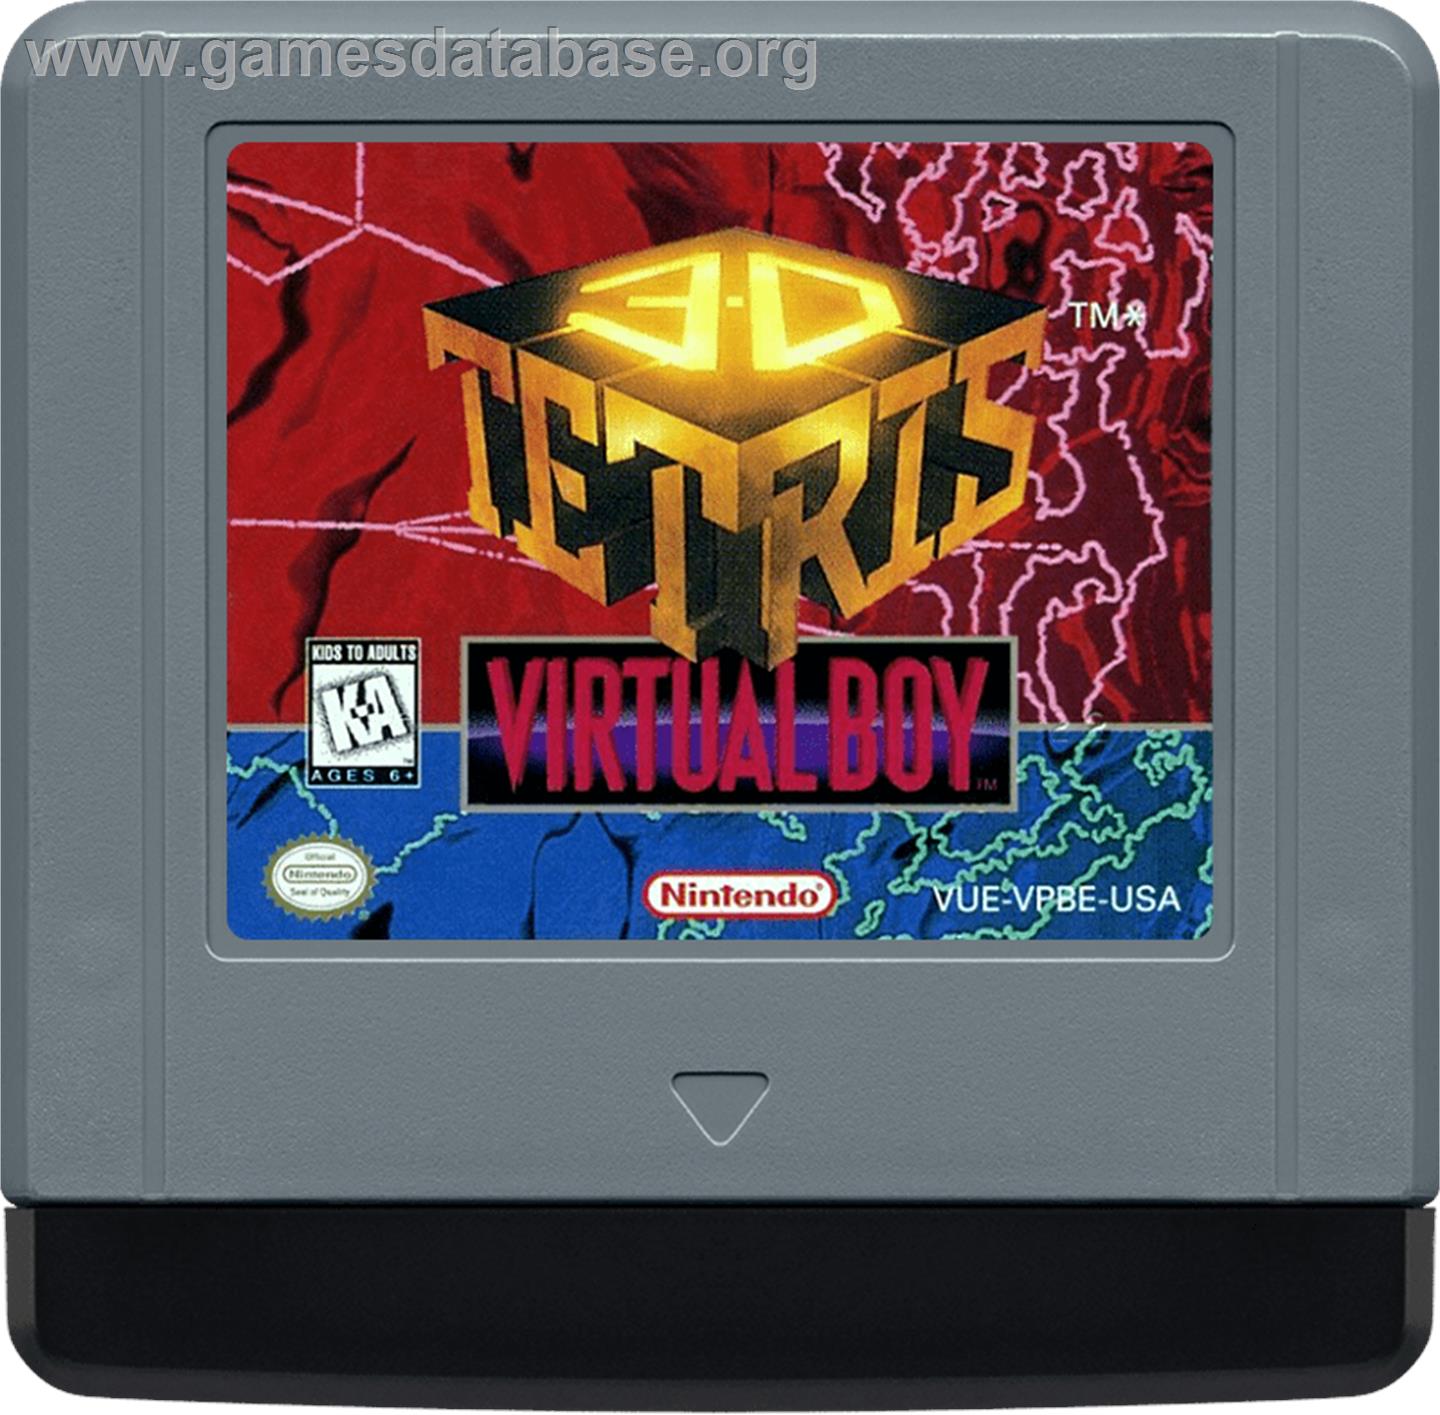 3D Tetris - Nintendo Virtual Boy - Artwork - Cartridge